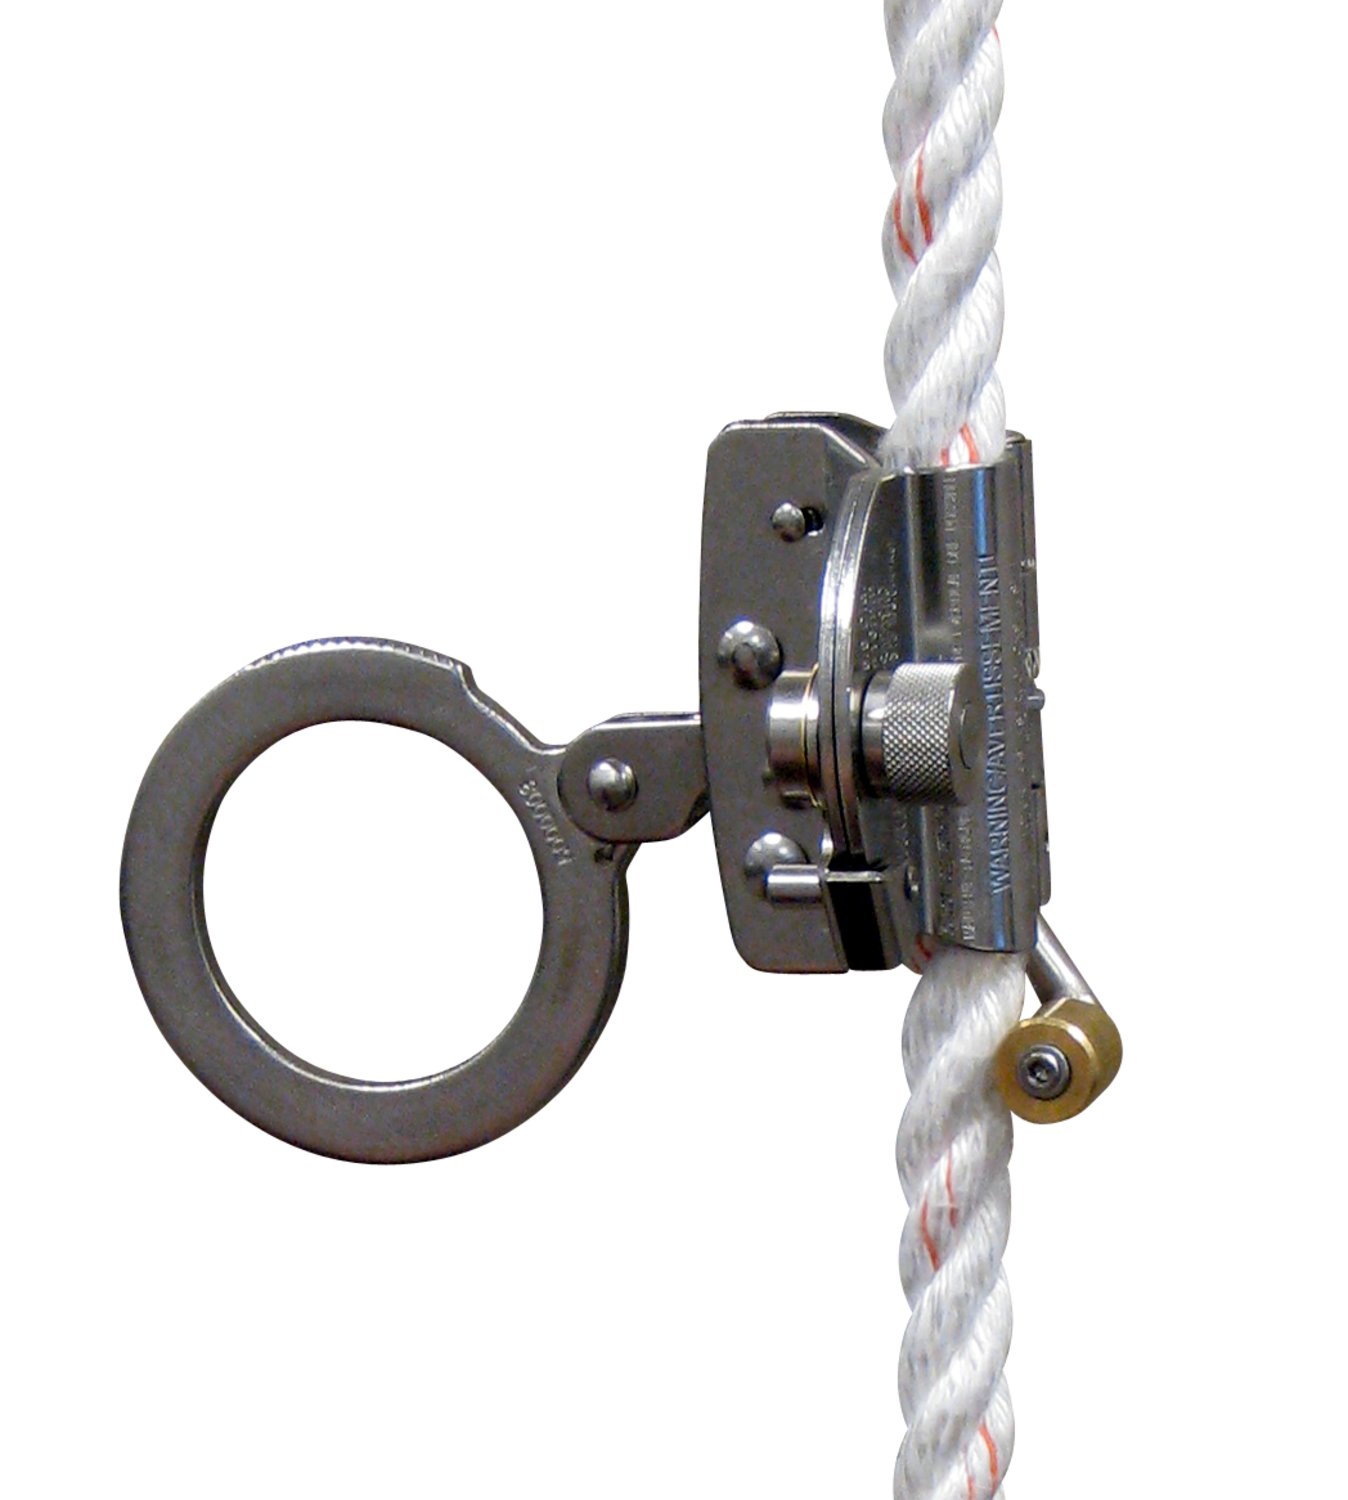 7012819598 - 3M Protecta Mobile Rope Grab 5000003, Fits 5/8 in Rope